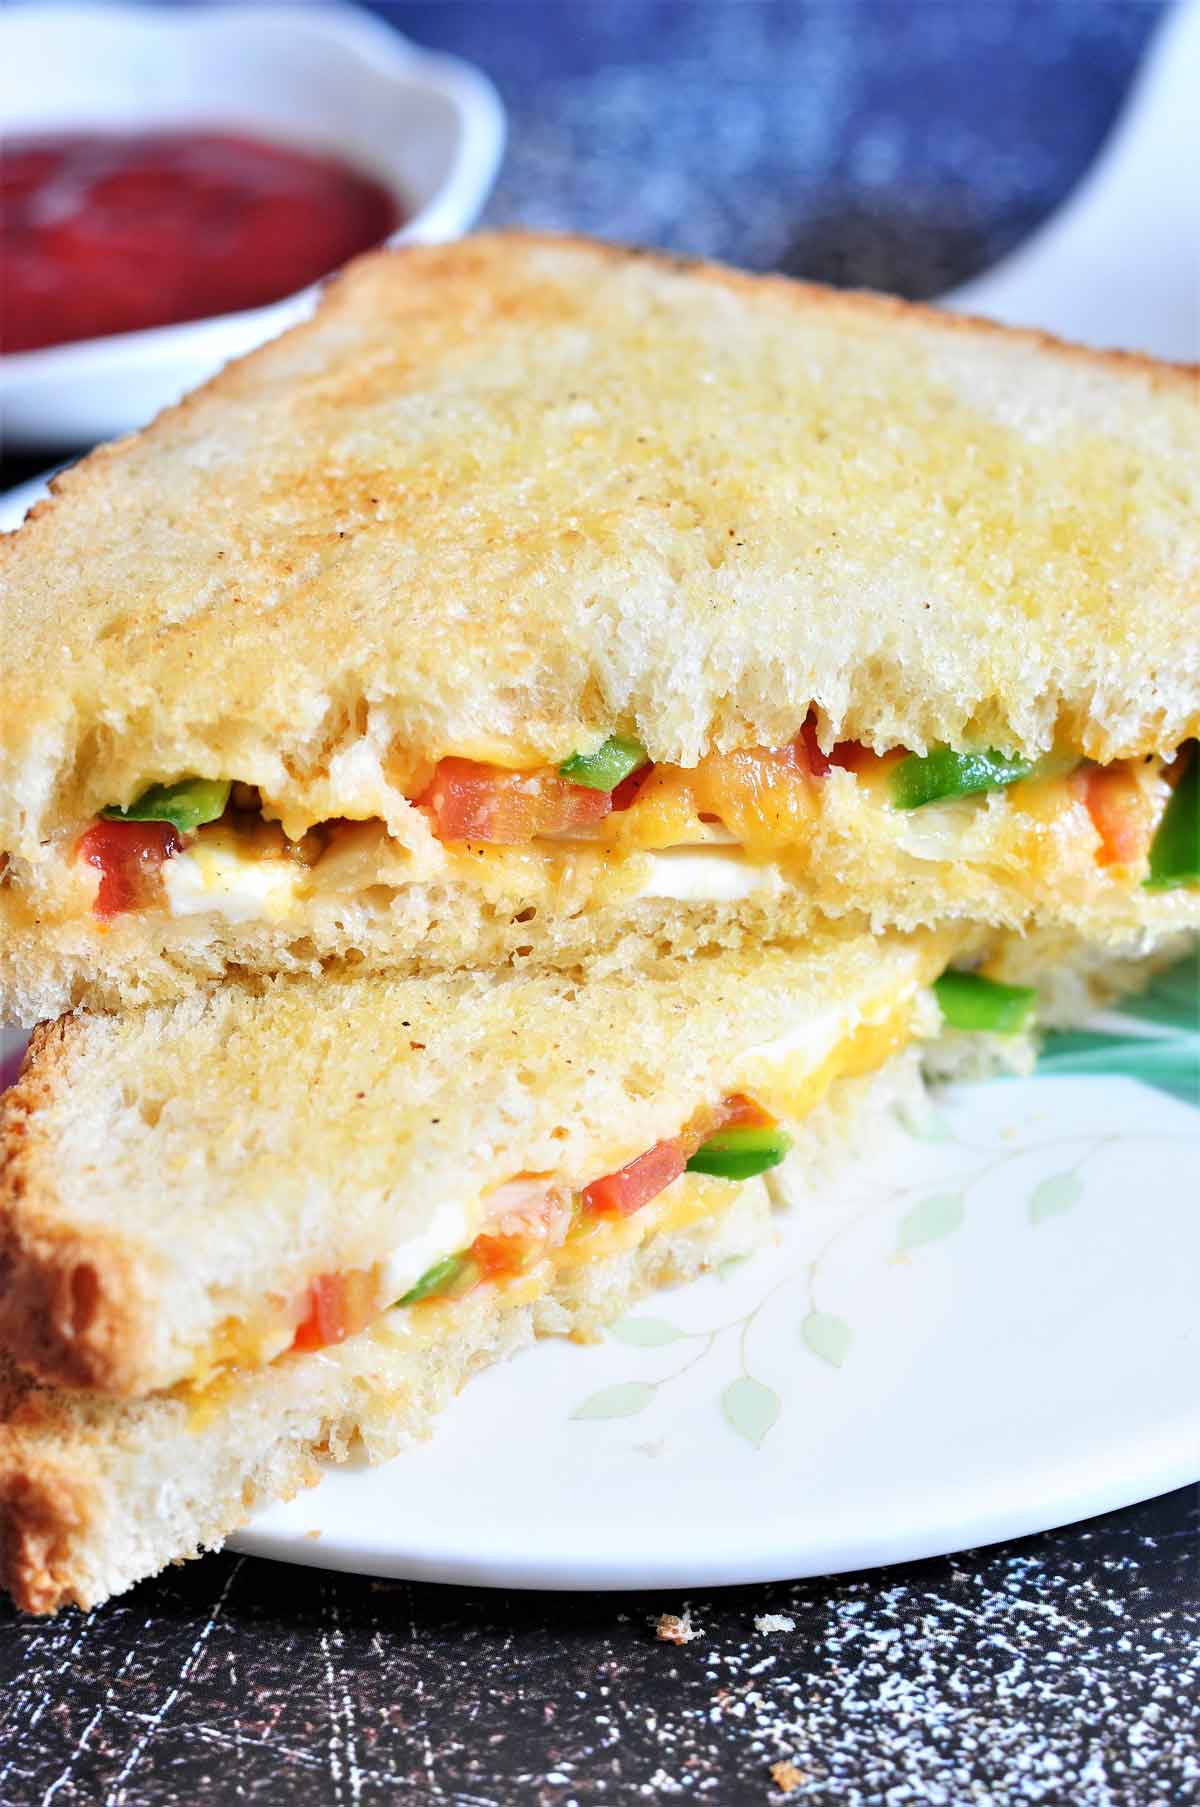 Veg Cheese Grilled Sandwich on a platter.